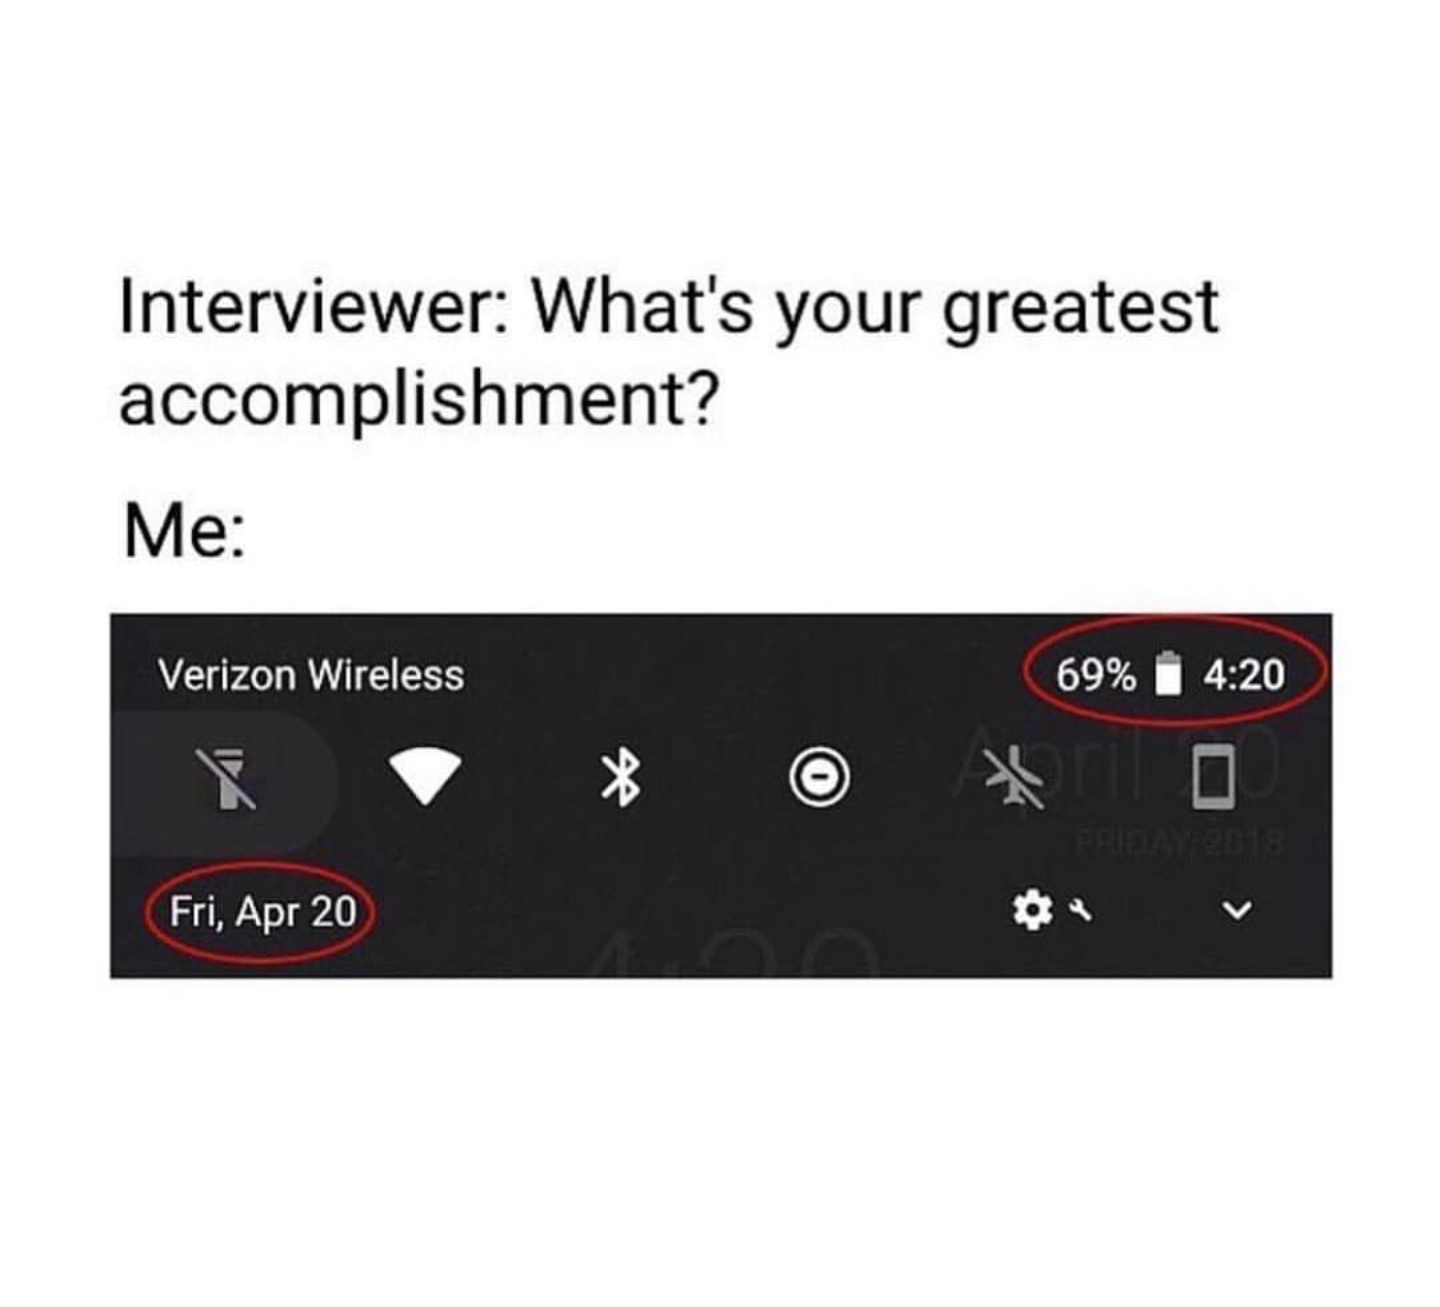 multimedia - Interviewer What's your greatest accomplishment? Me Verizon Wireless 69% Fri, Apr 20